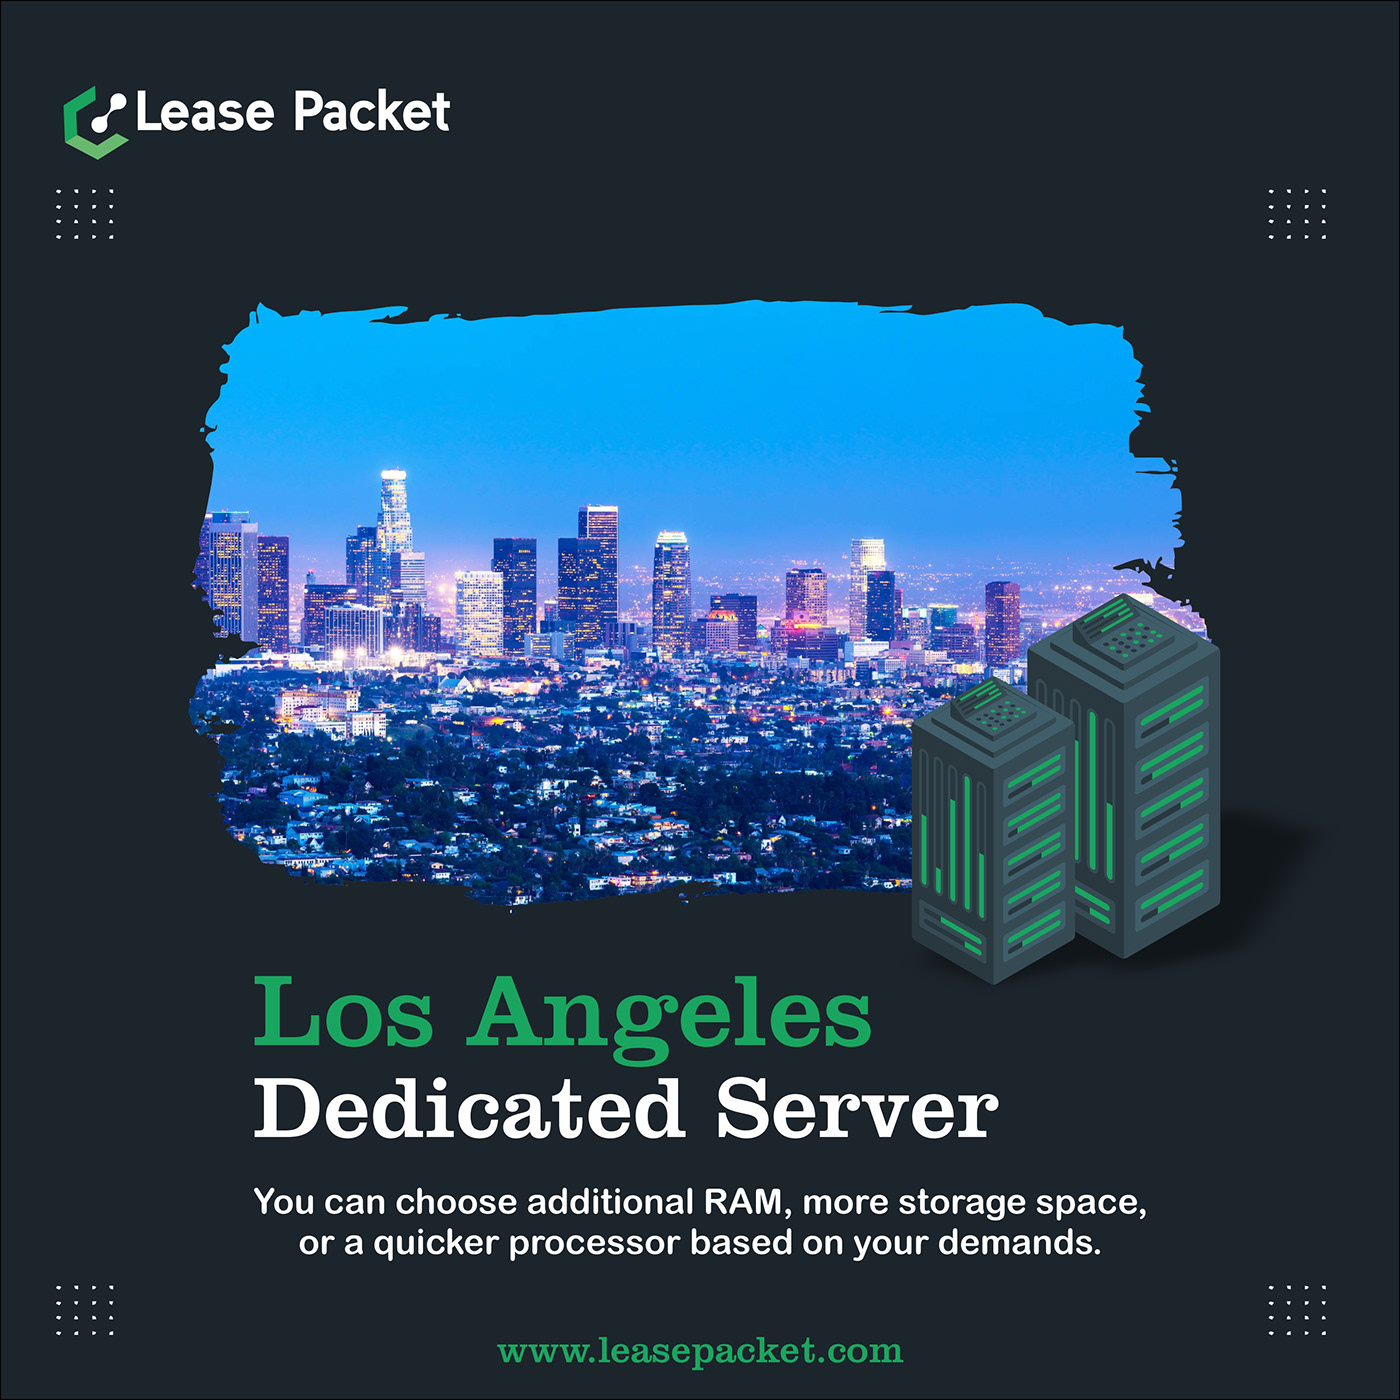 #leasepacket #serversolutions dedicatedservers losangeles LOSANGELESDEDICATEDSERVER LOSANGELESSERVERS serverprovider